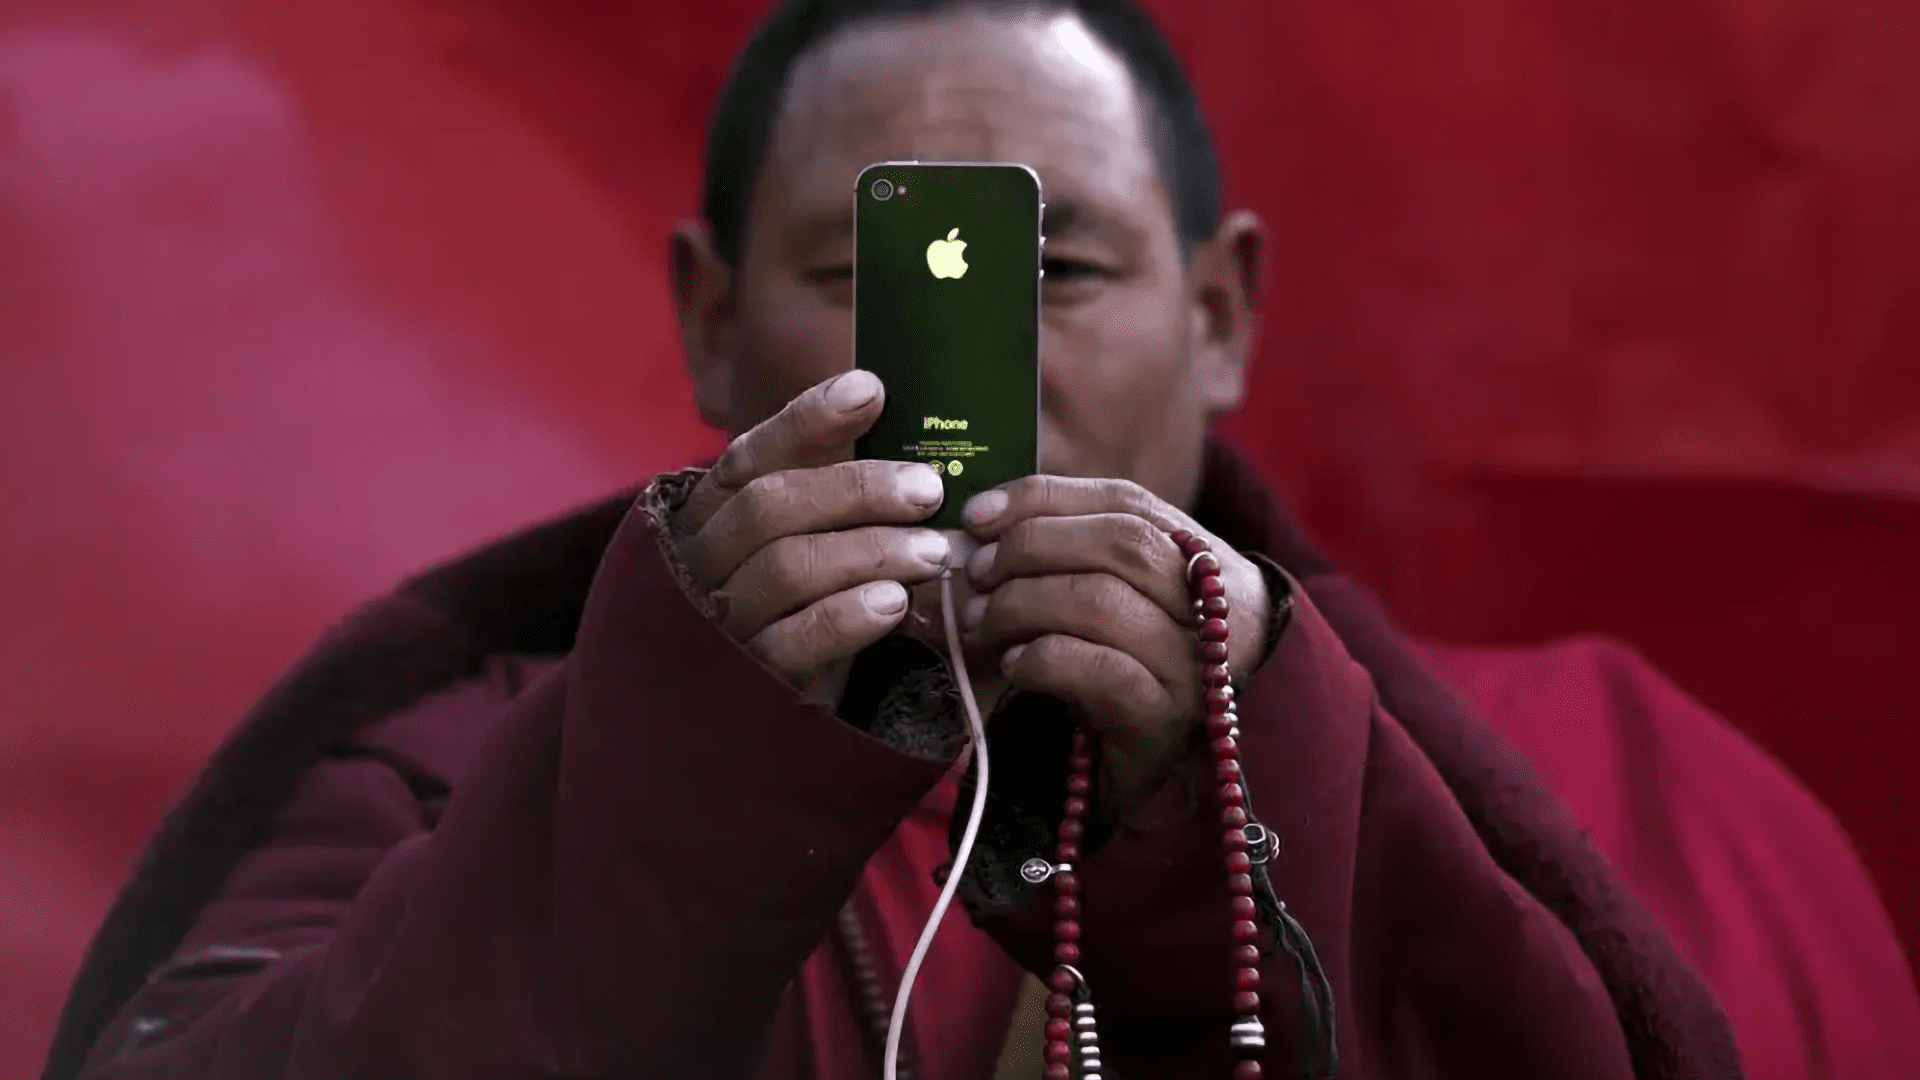 A Tibetan buddhist monk holing up a phone Image from REUTERS/Damir Sagolj